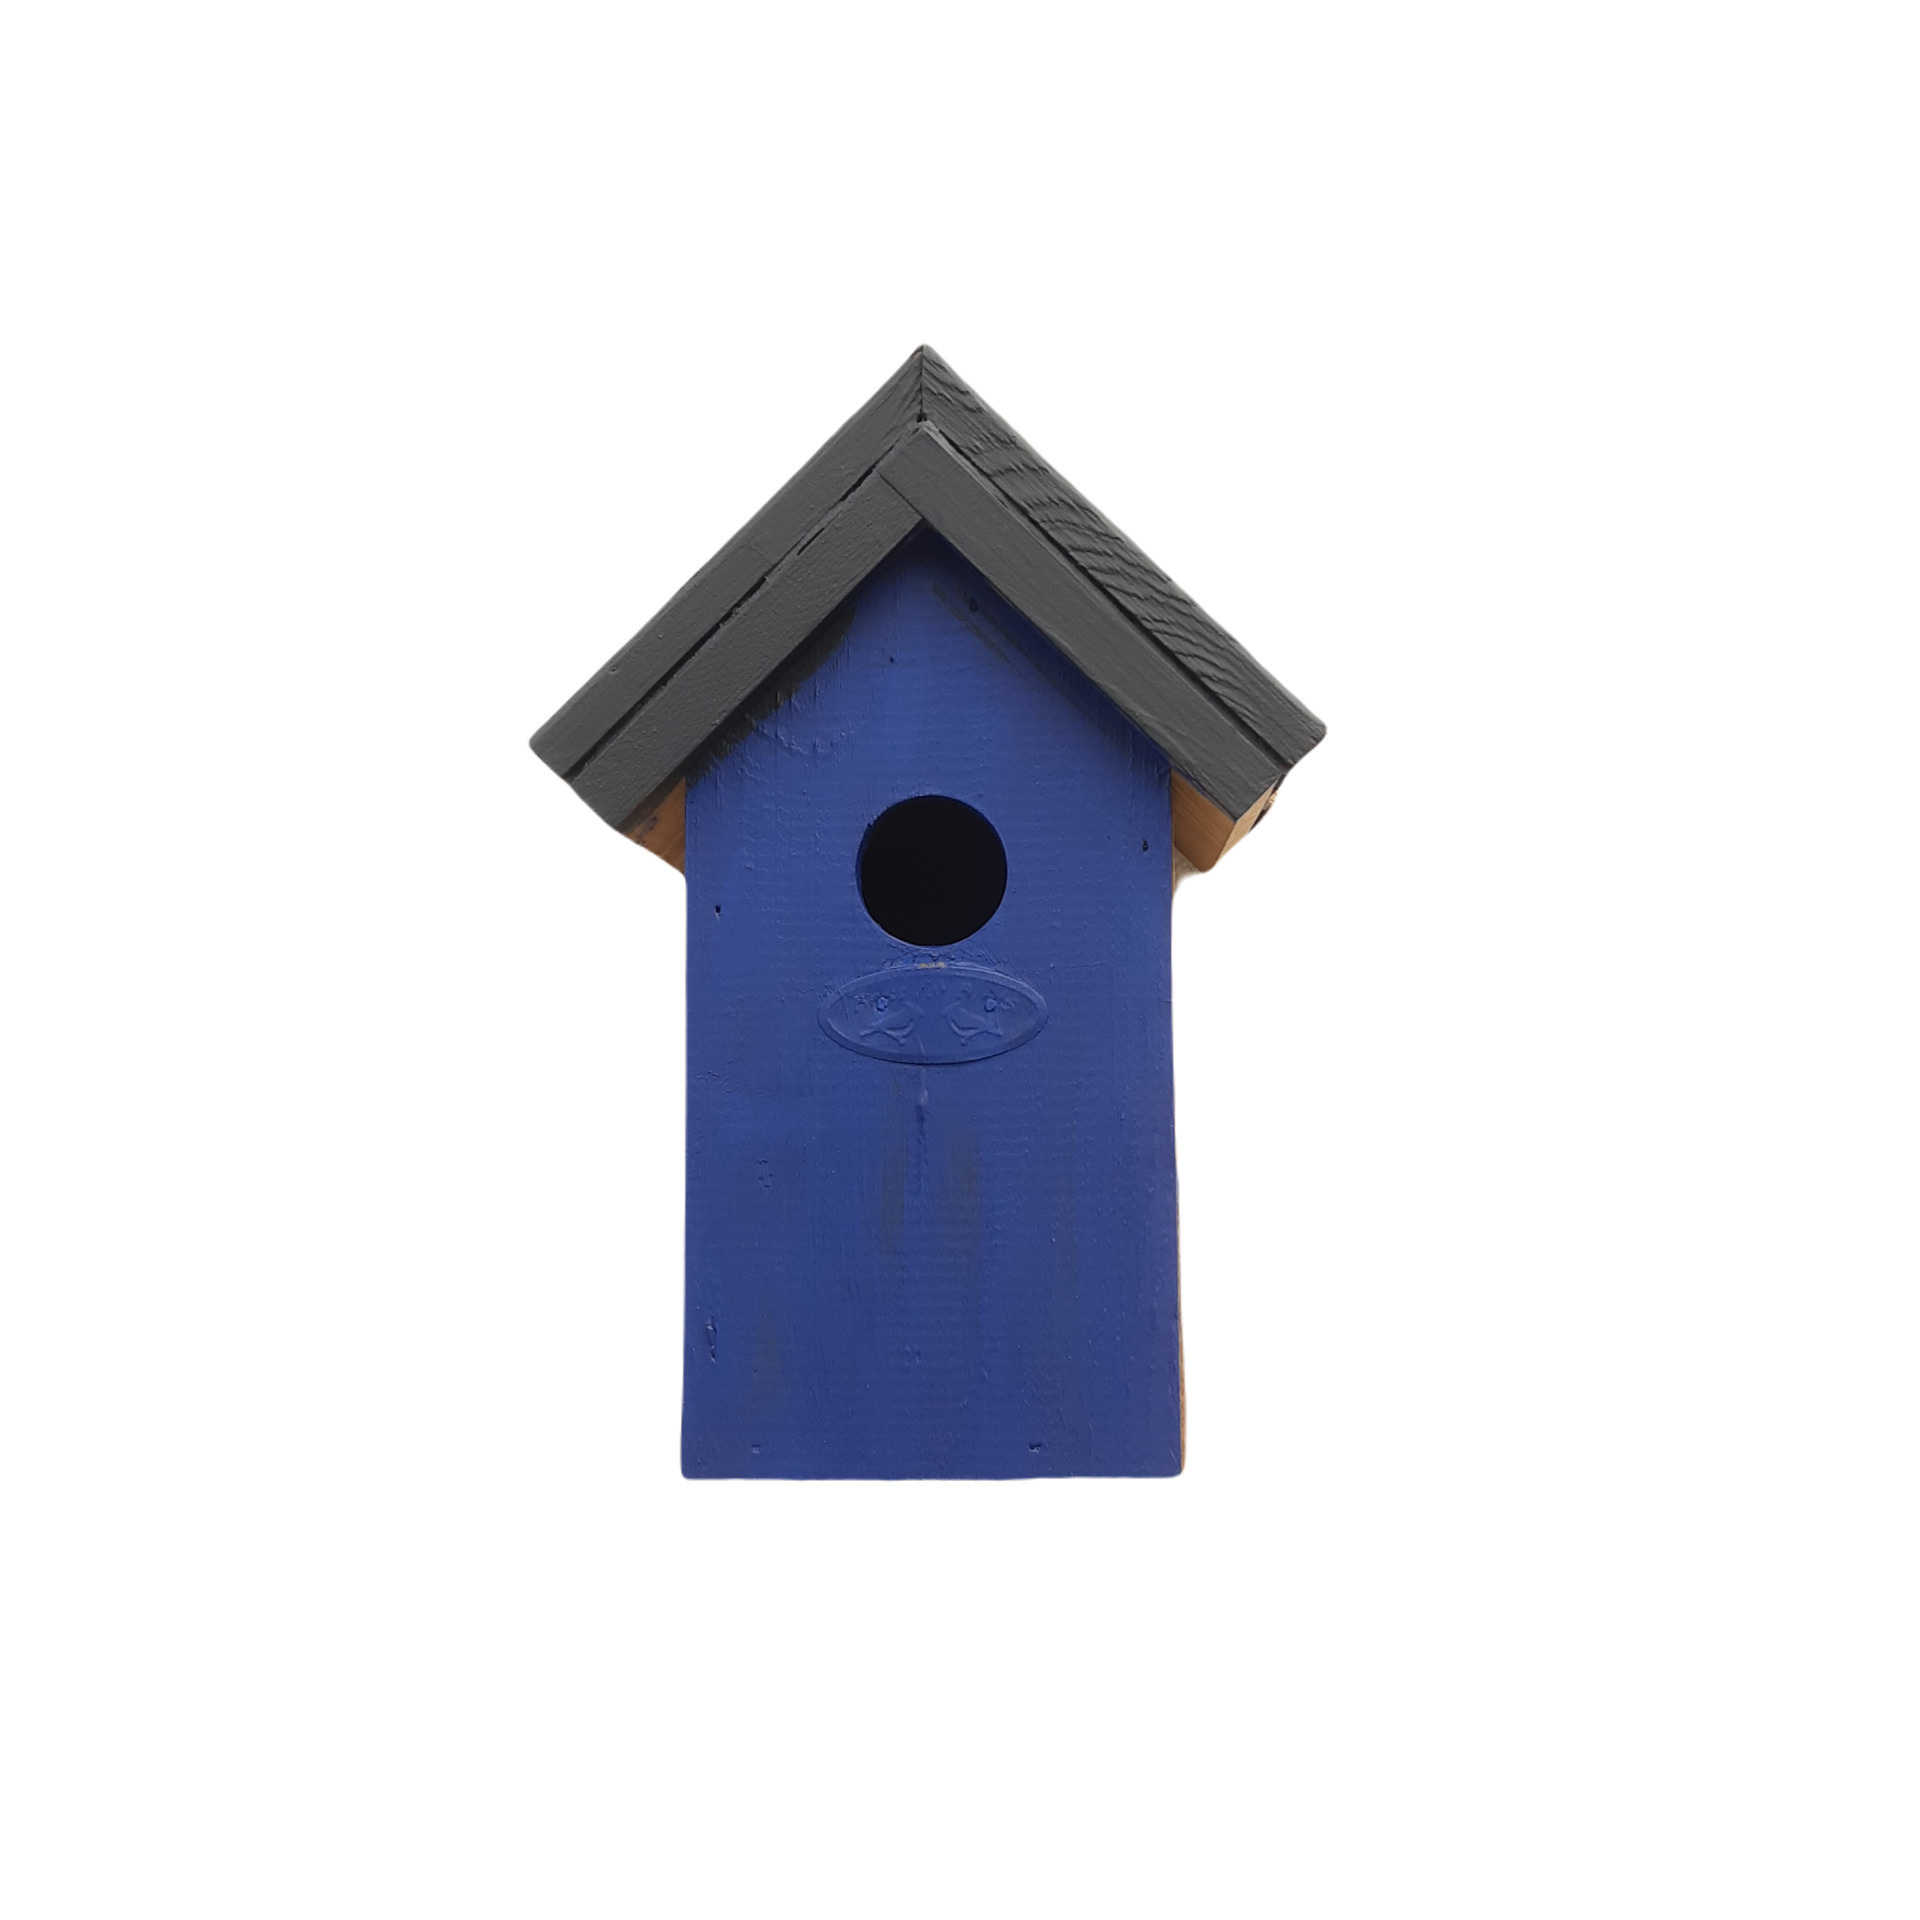 Lifetime Garden Houten vogelhuisje/nestkastje 22 cm - zwart/blauw Dhz schilderen pakket -